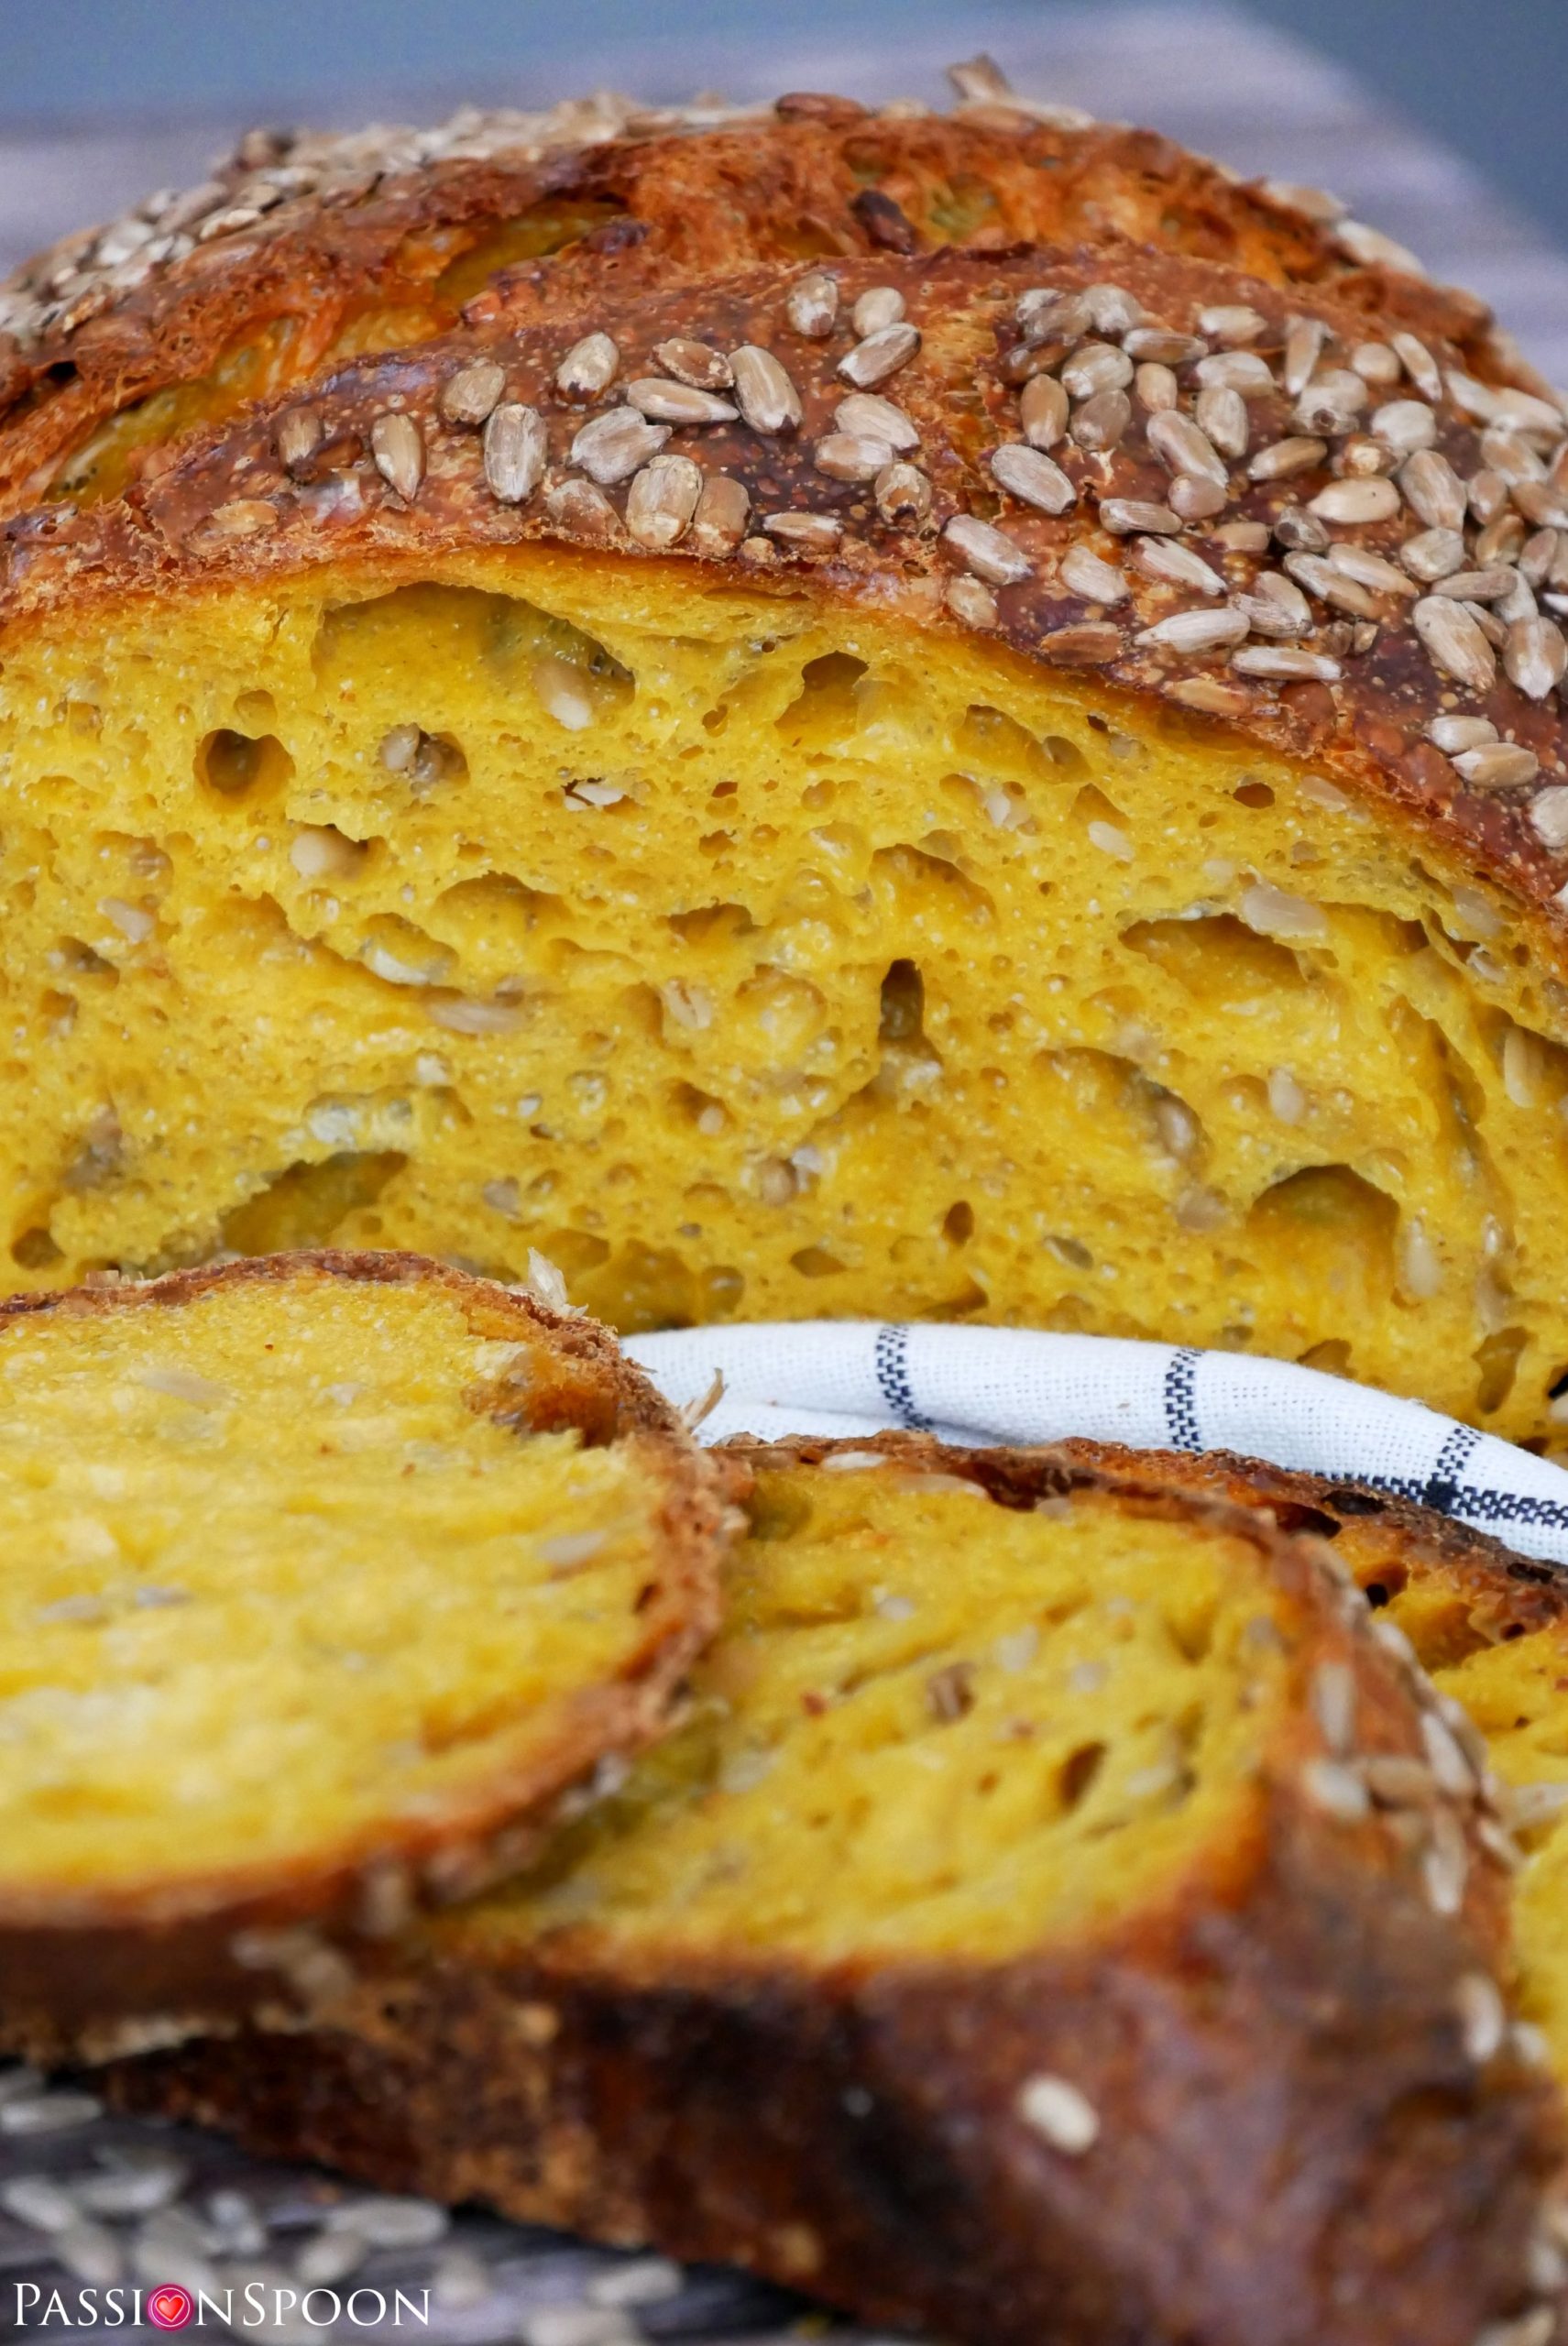 Crock Pot Sourdough Bread Recipe - The Happy Mustard Seed